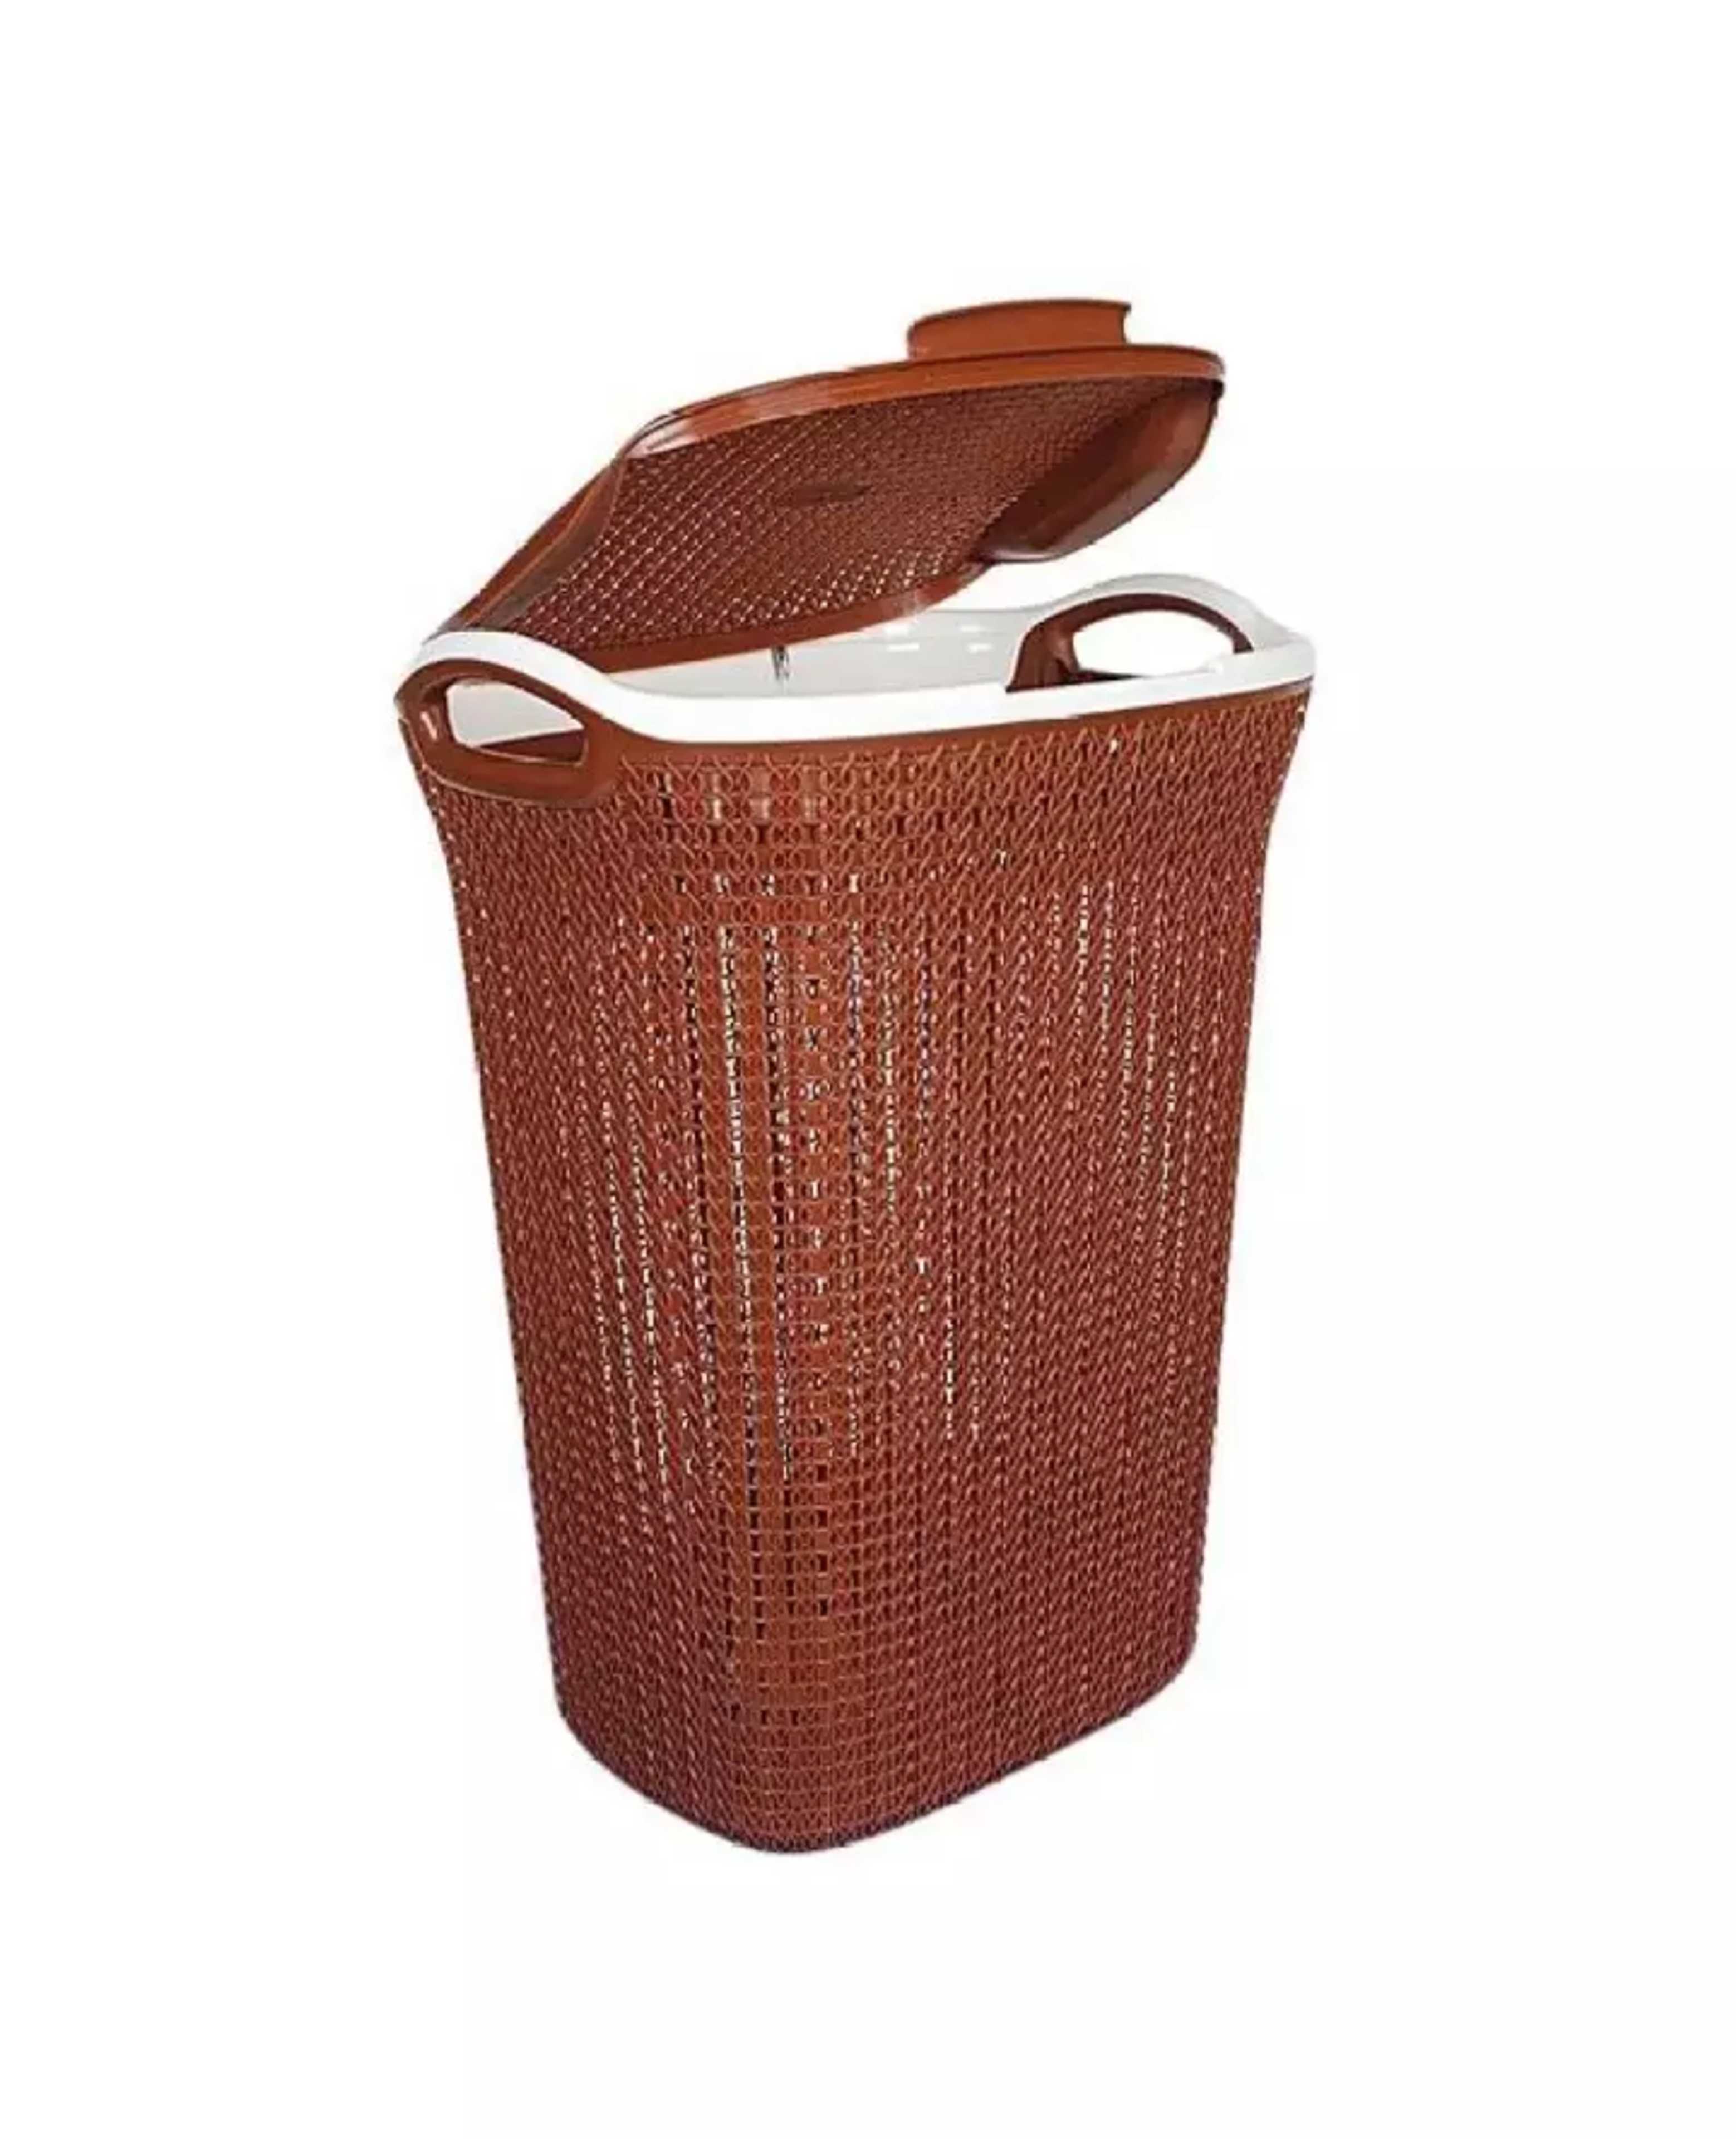 Premium Laundry Basket in knitting design